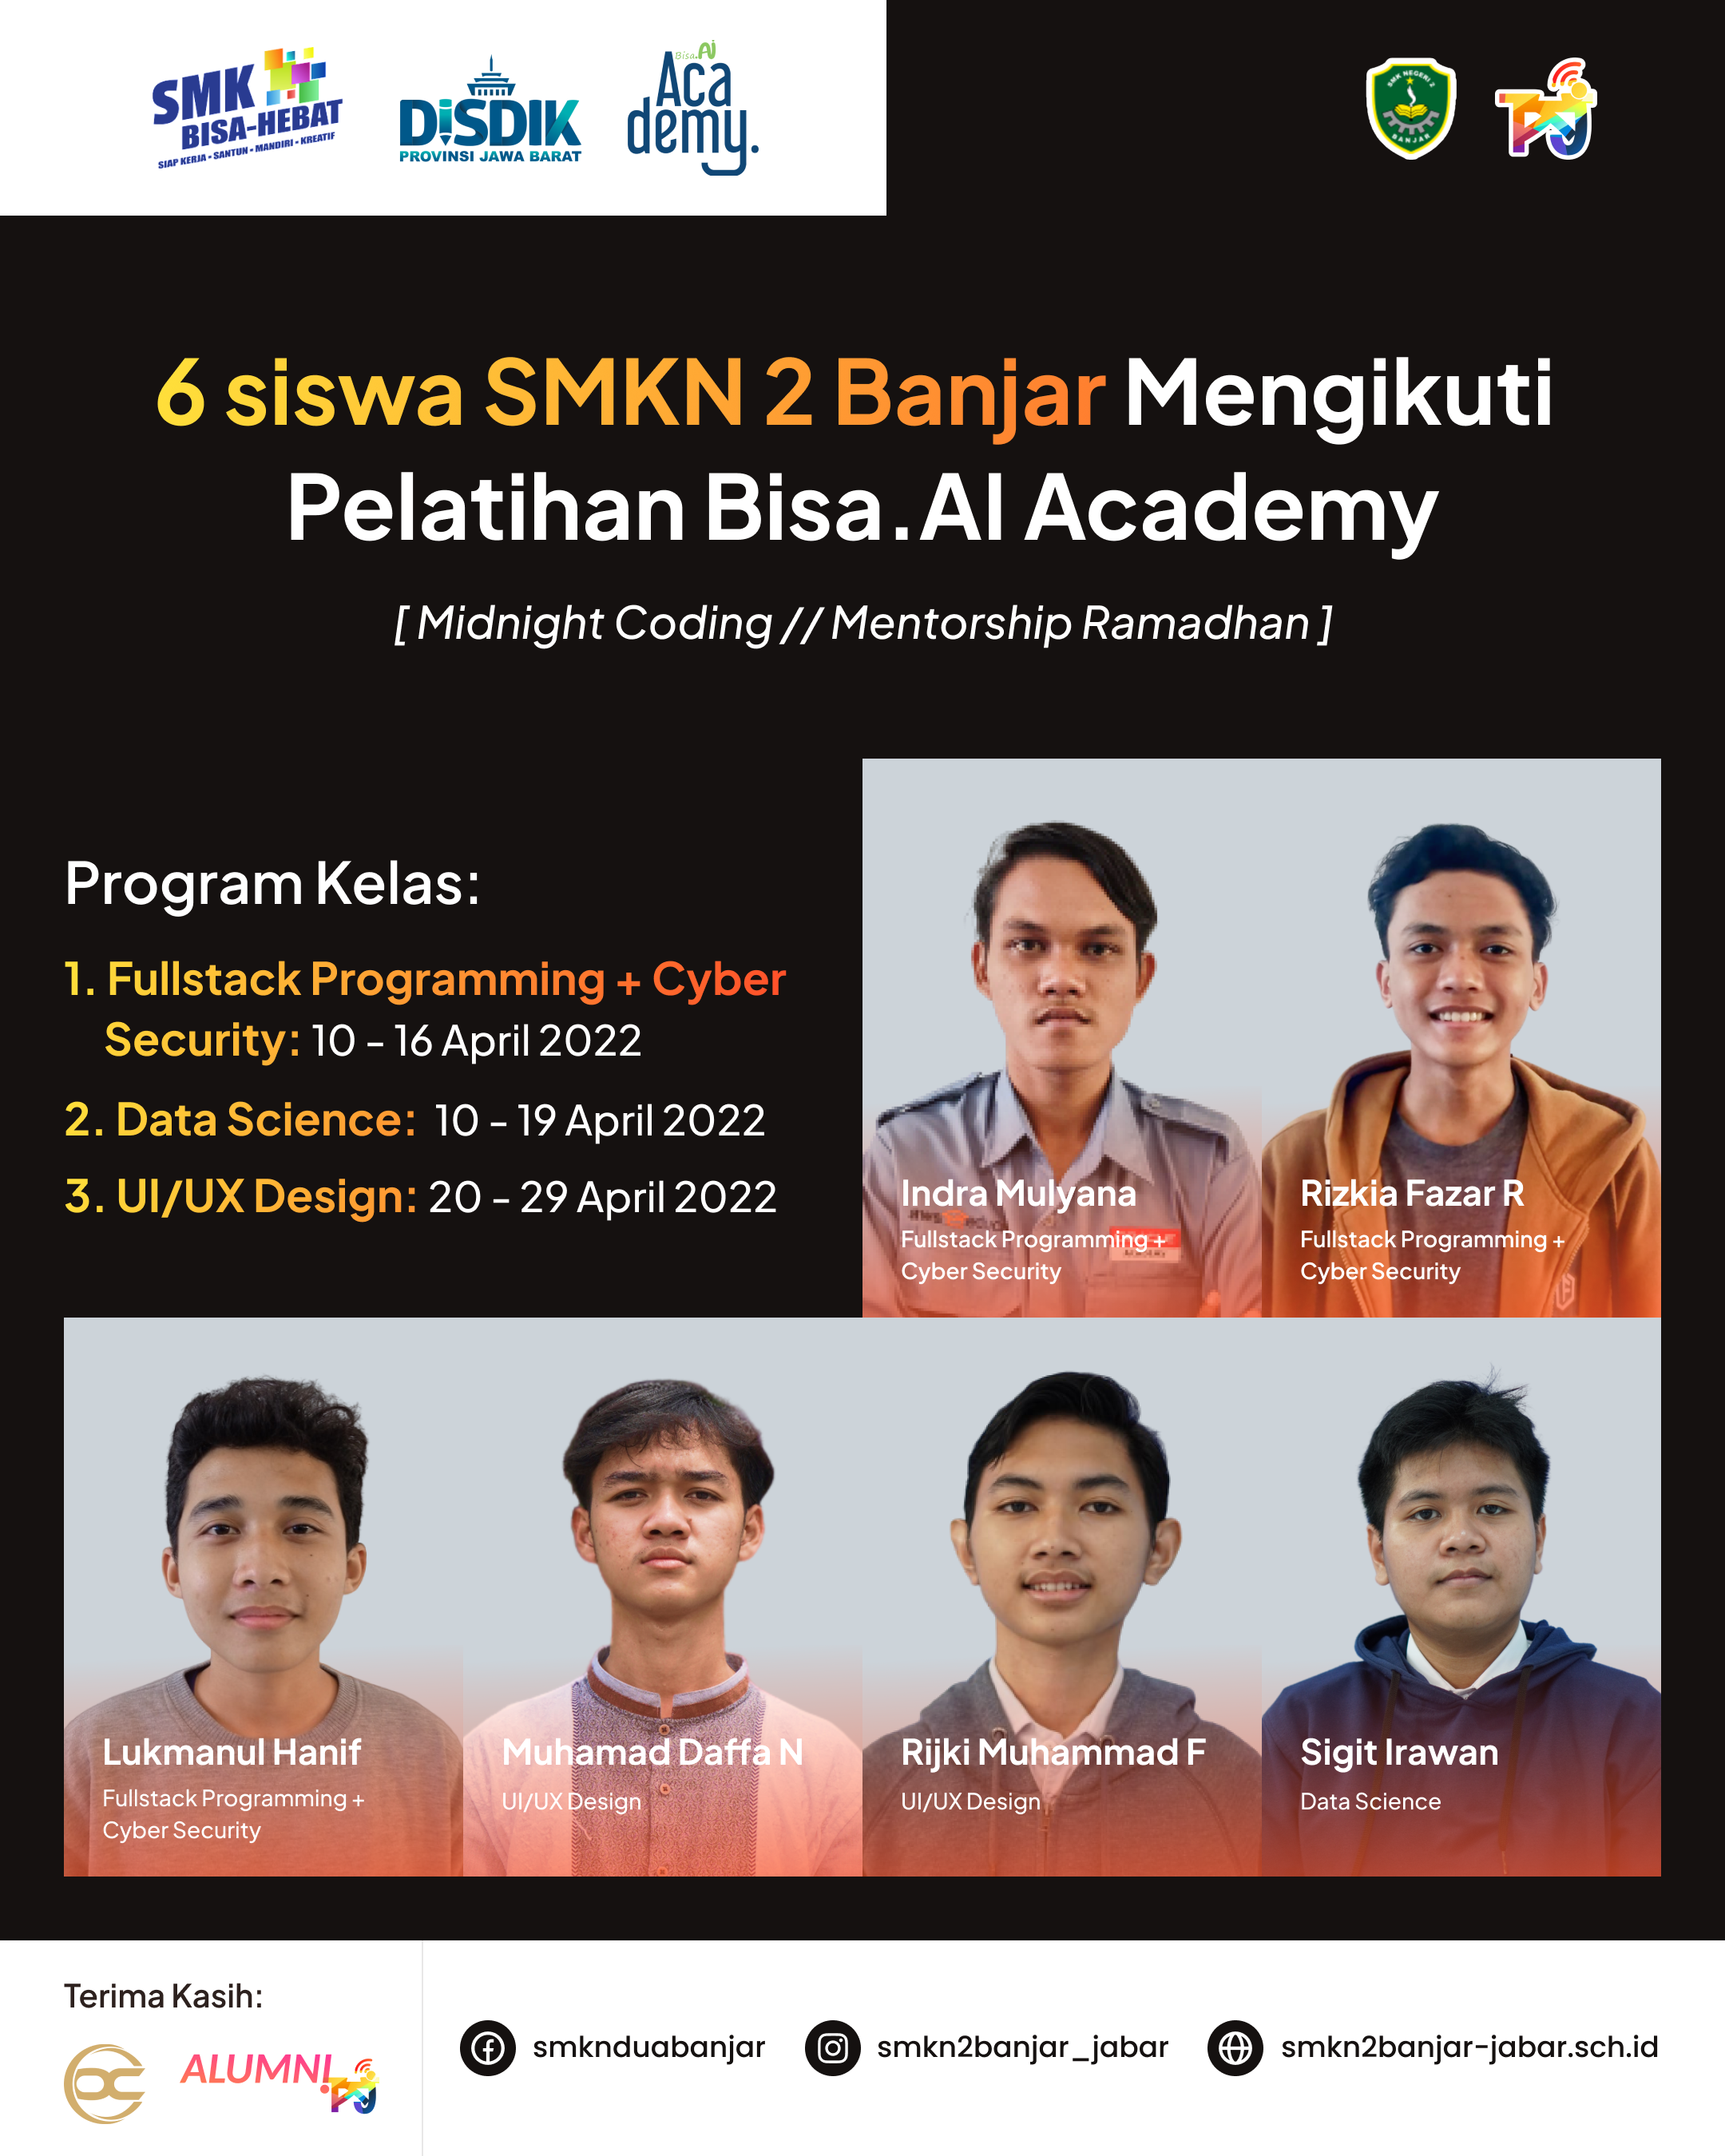 Pelatihan BISA.AI Academy (Midnight Coding // Mentoring Ramadhan) 2022